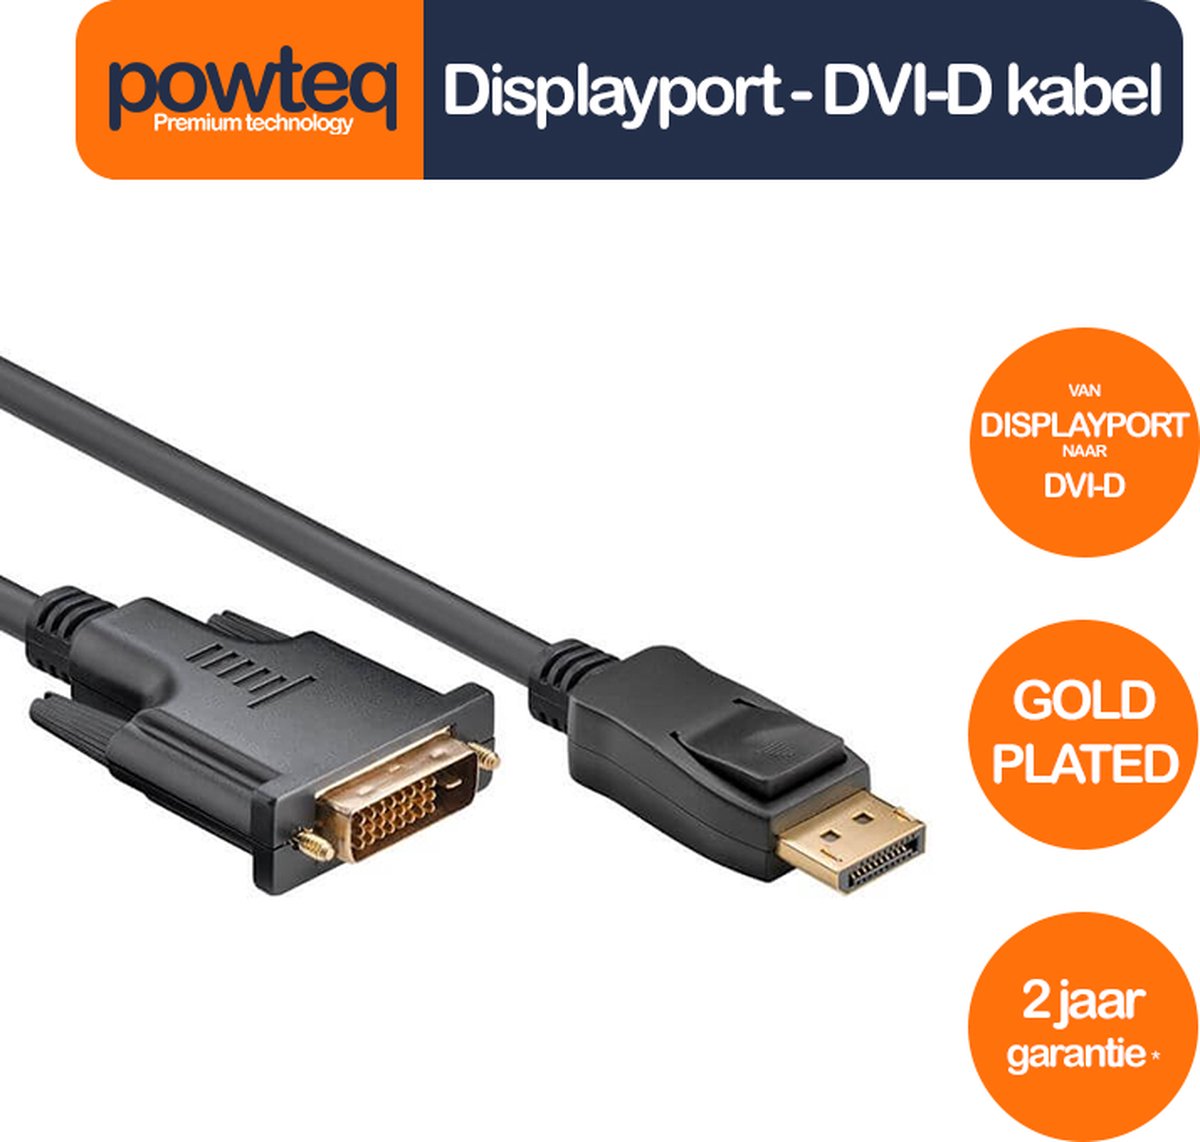 Powteq - 1 meter premium Displayport naar DVI-D kabel - Gold-plated - Powteq